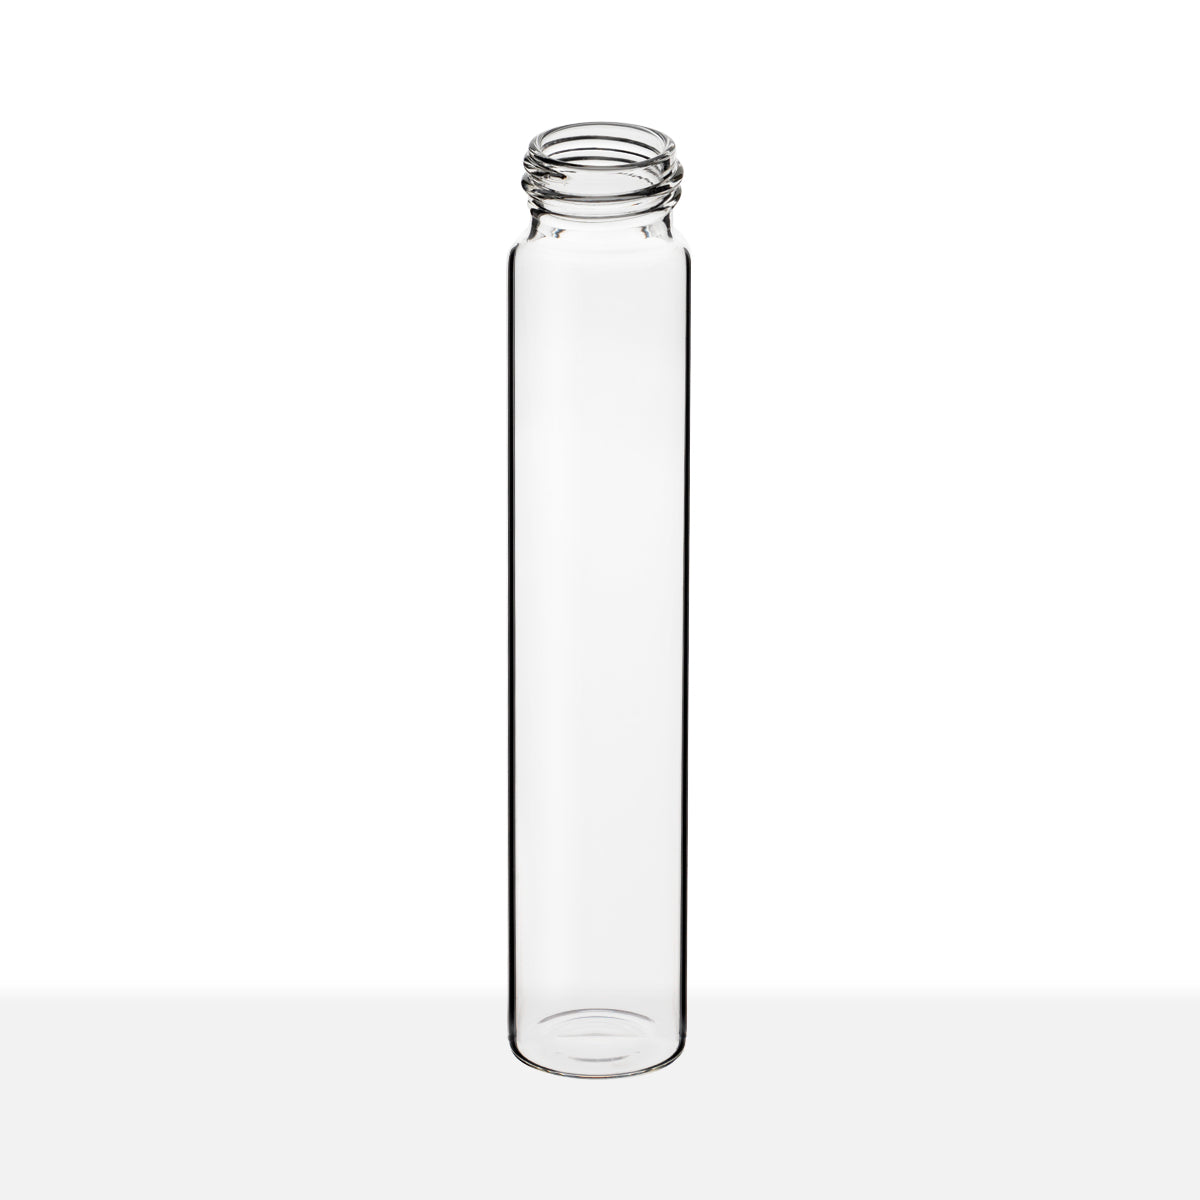 EPA & SCINTILLATION GLASS VIALS - CLEAR Item #:EC28140-2